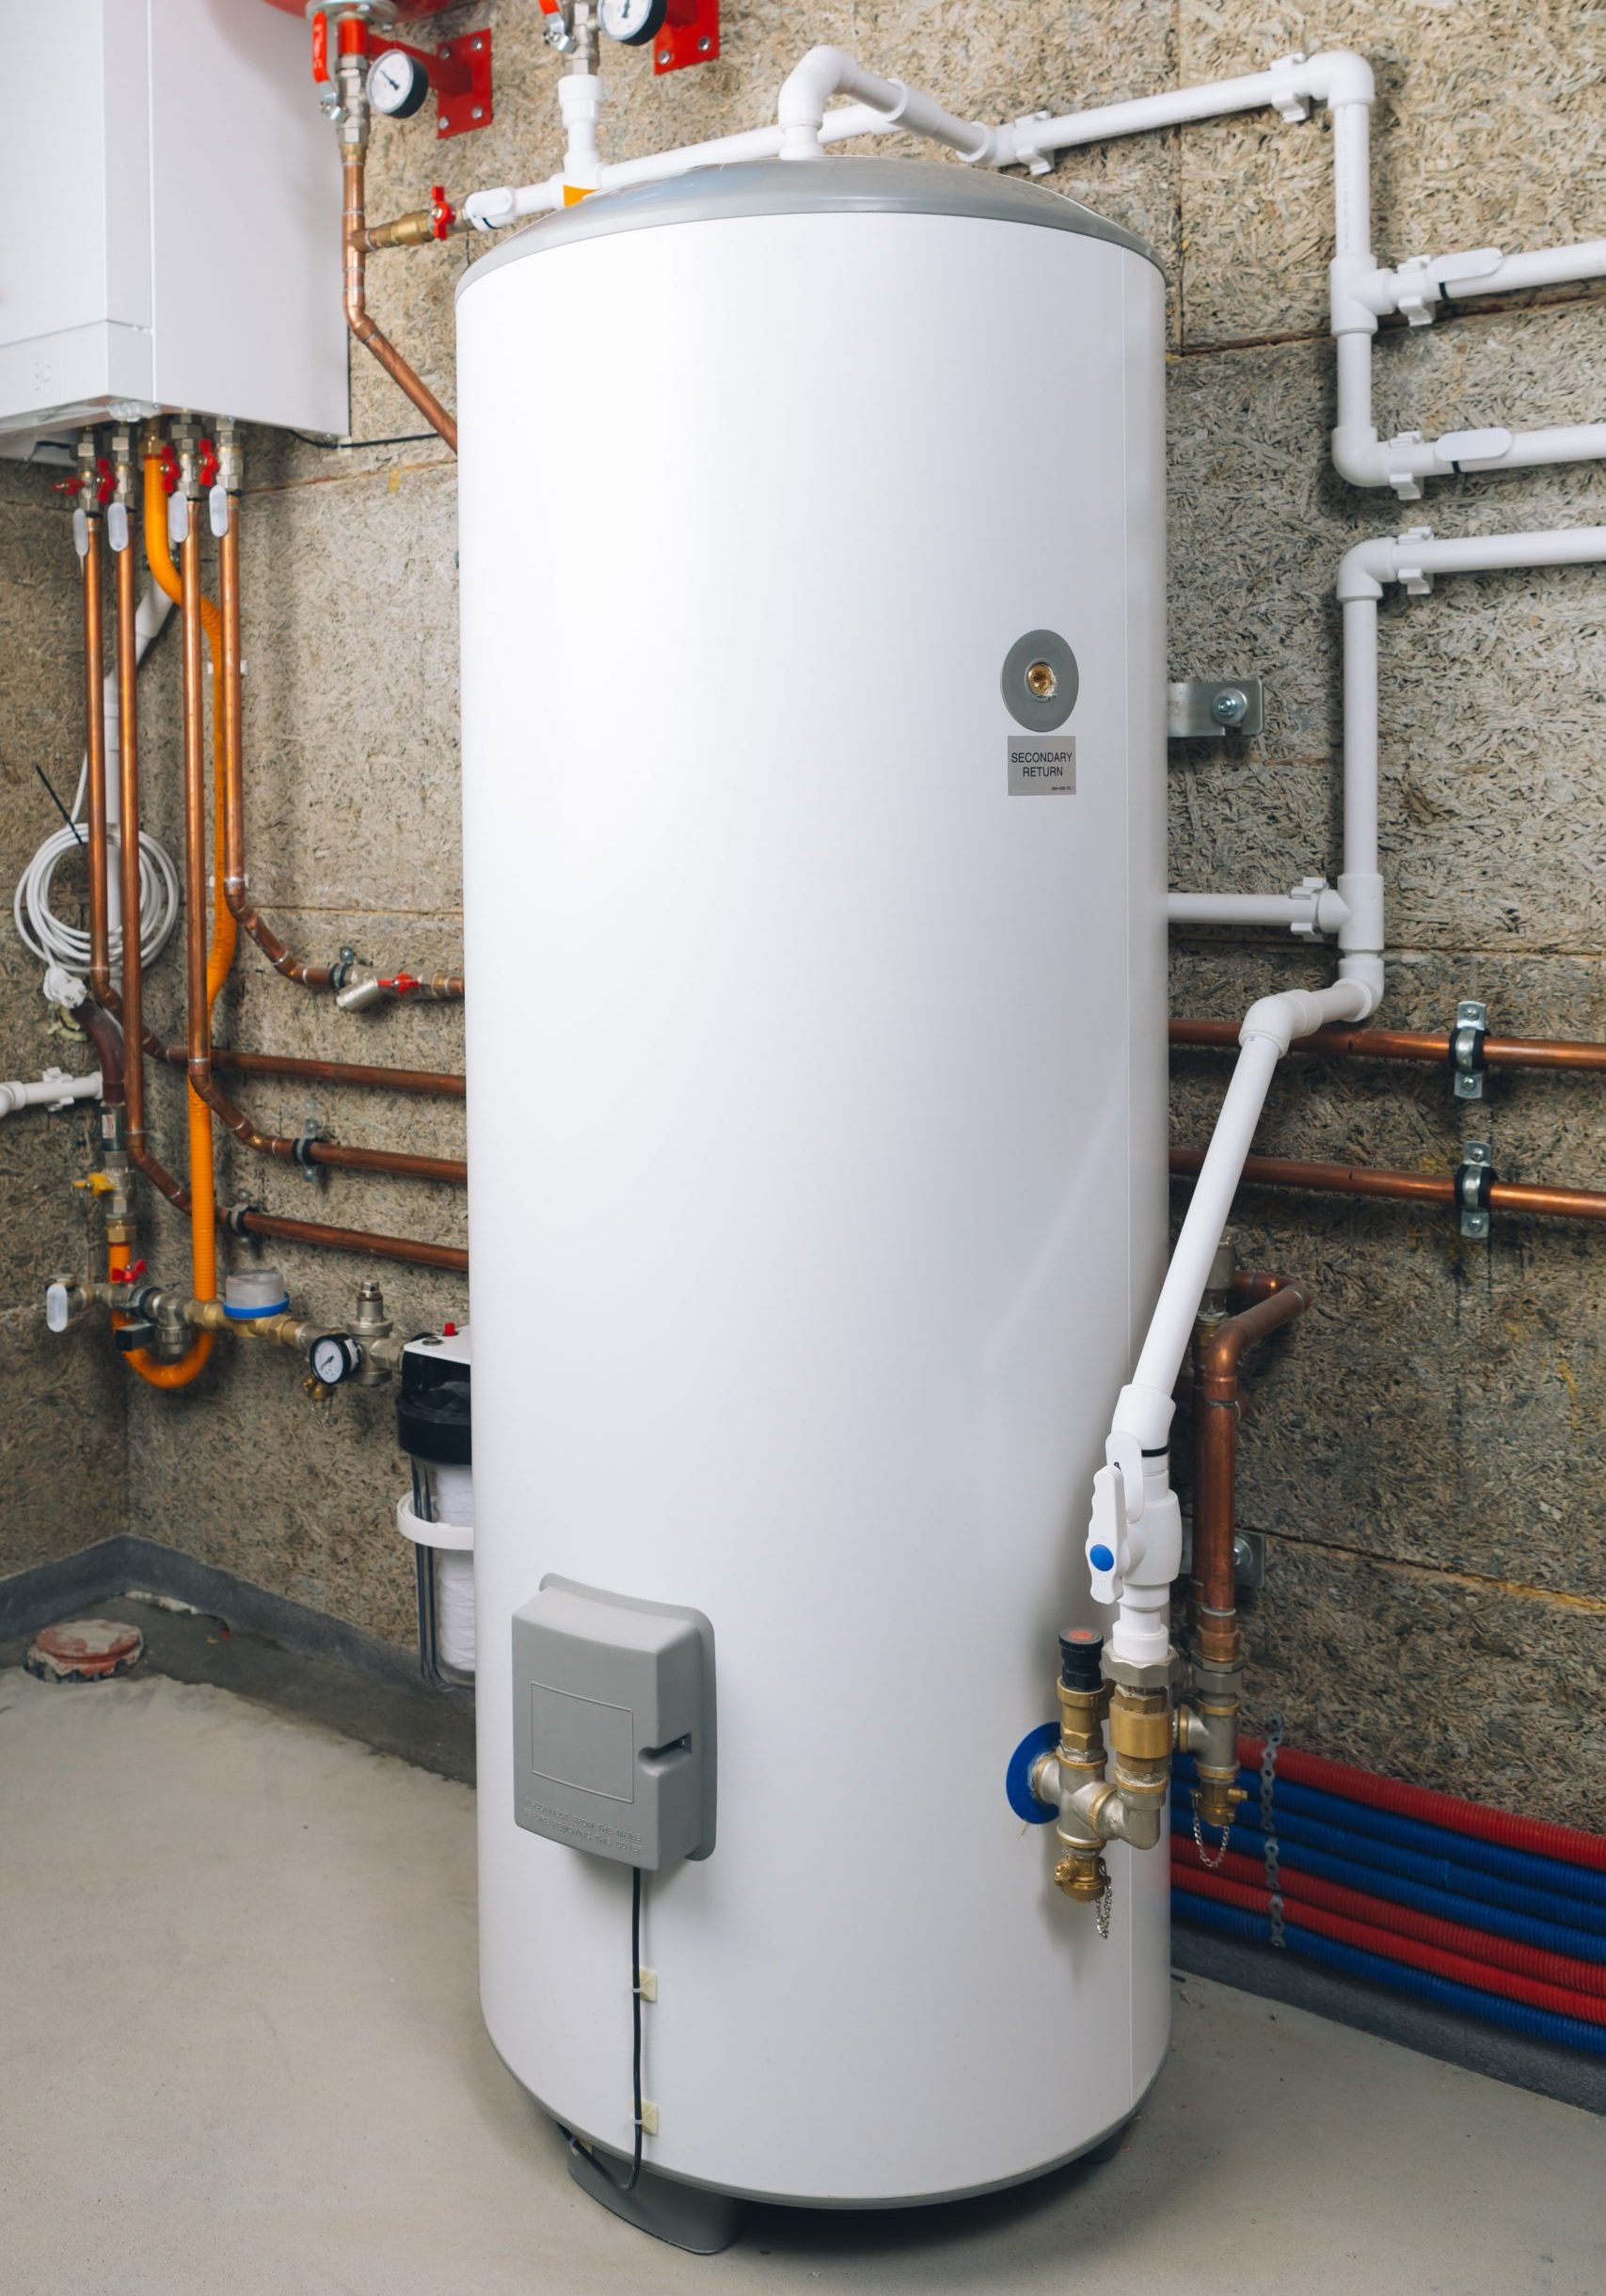 water heater in modern boiler room